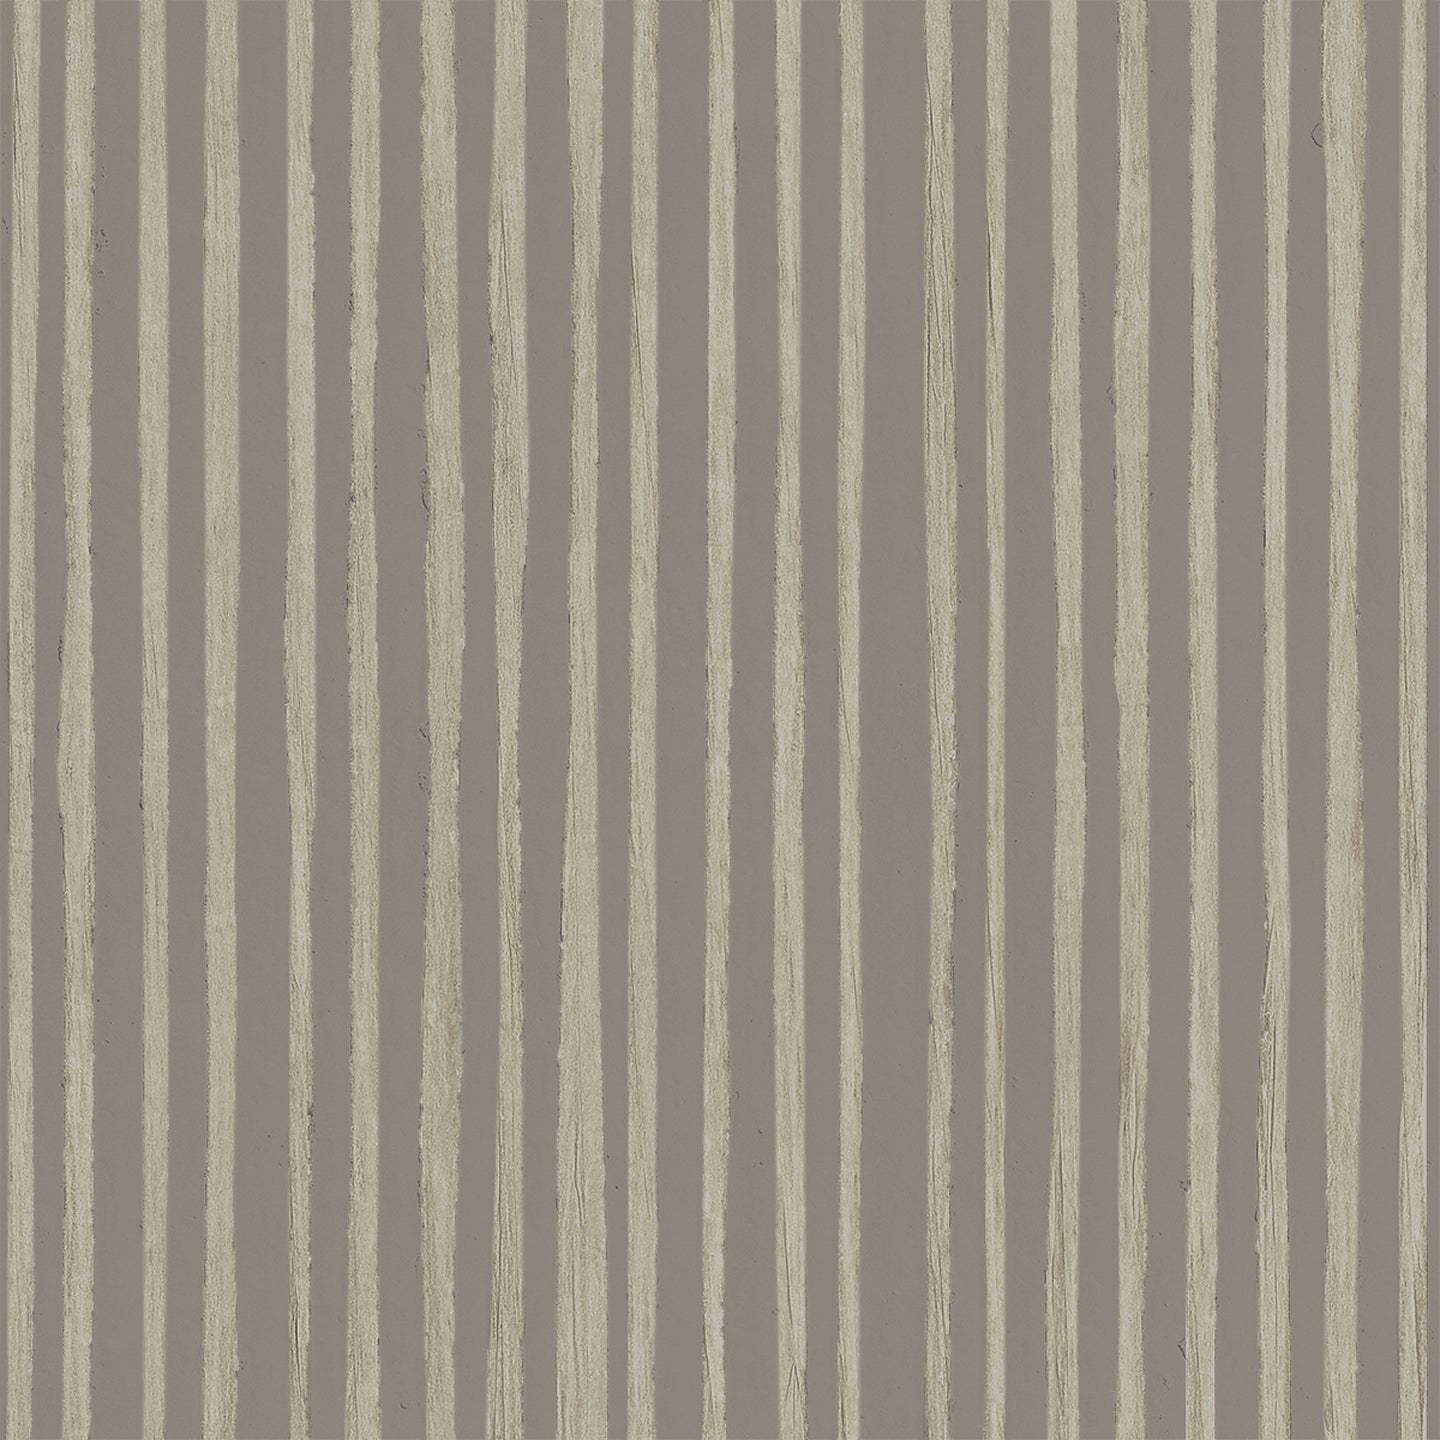 Purchase Phillip Jeffries Wallpaper - 10368, Zebra Grass - Graphite Stripe 